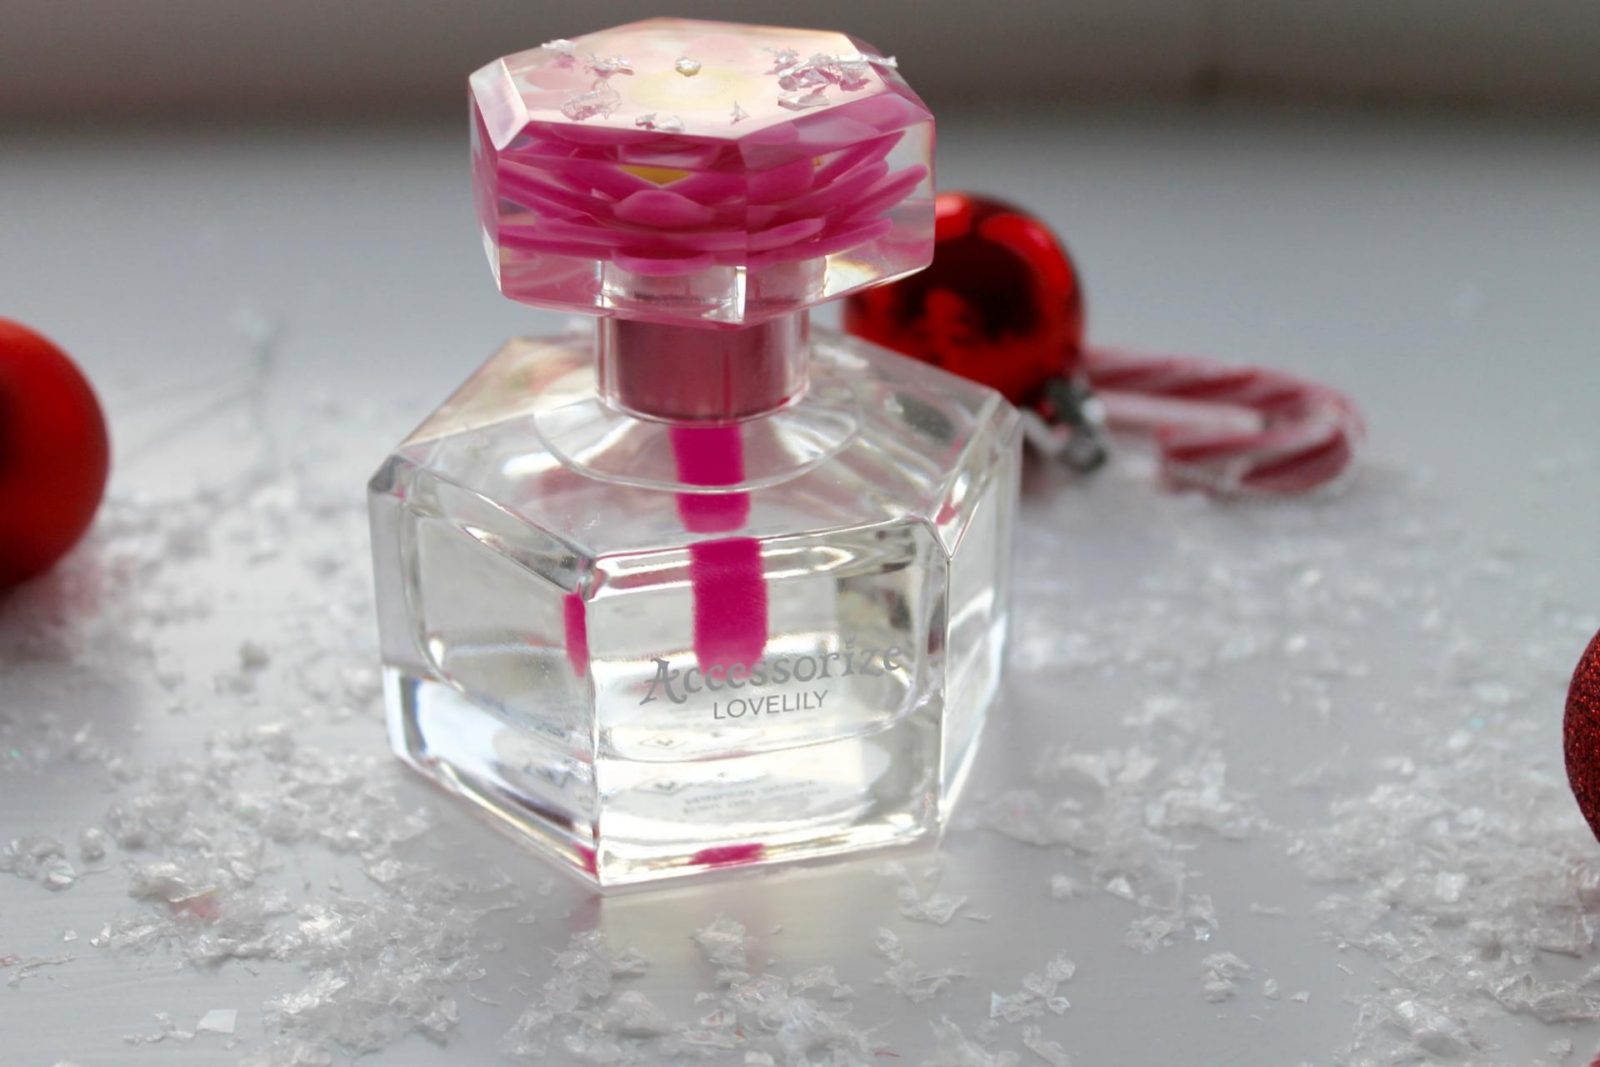 accessorize-lovelily-perfume-3